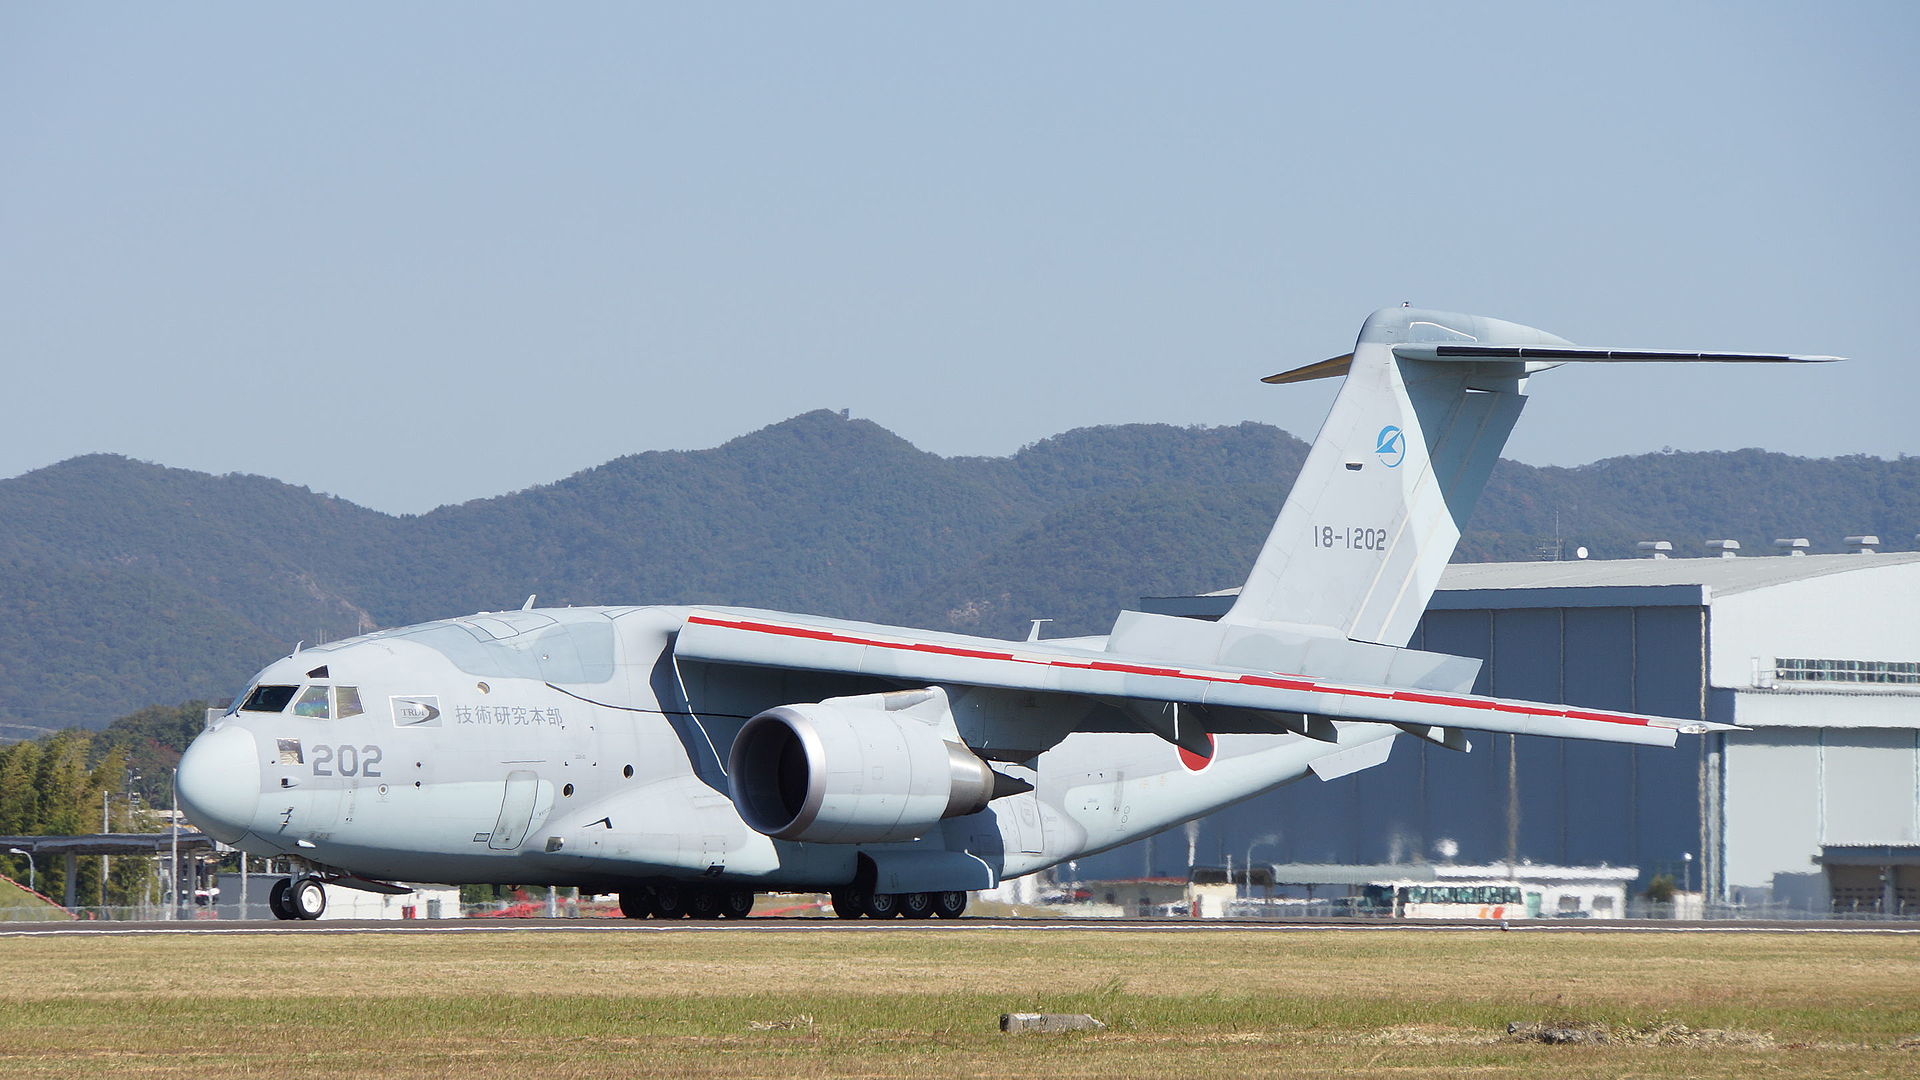 1920px-JASDF_XC-2%2818-1202%29_at_Gifu_Air_Base_October_25%2C_2015_b.JPG